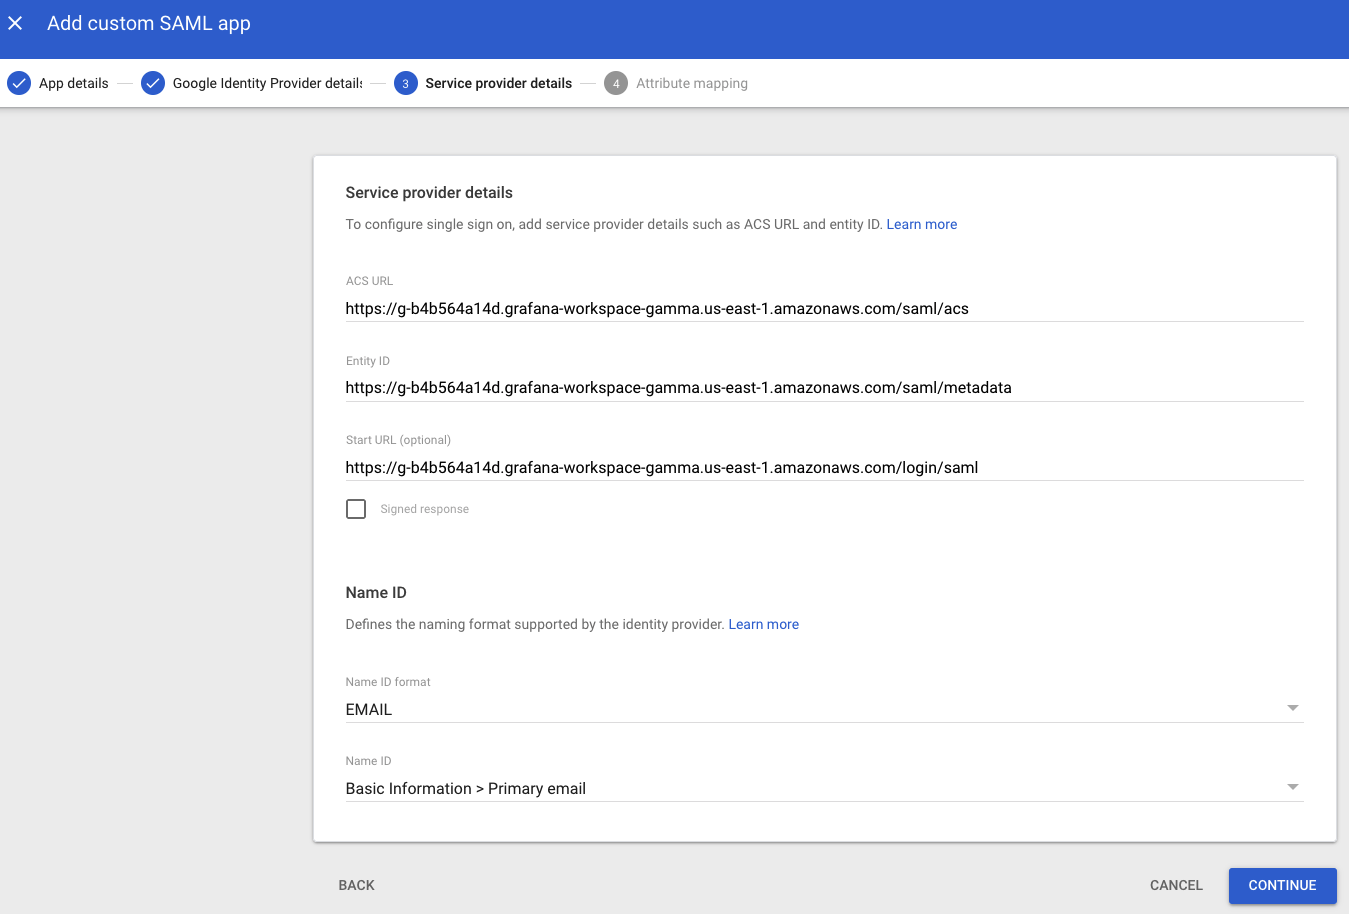 Google Workspace - Add custom SAML app - Service provider details